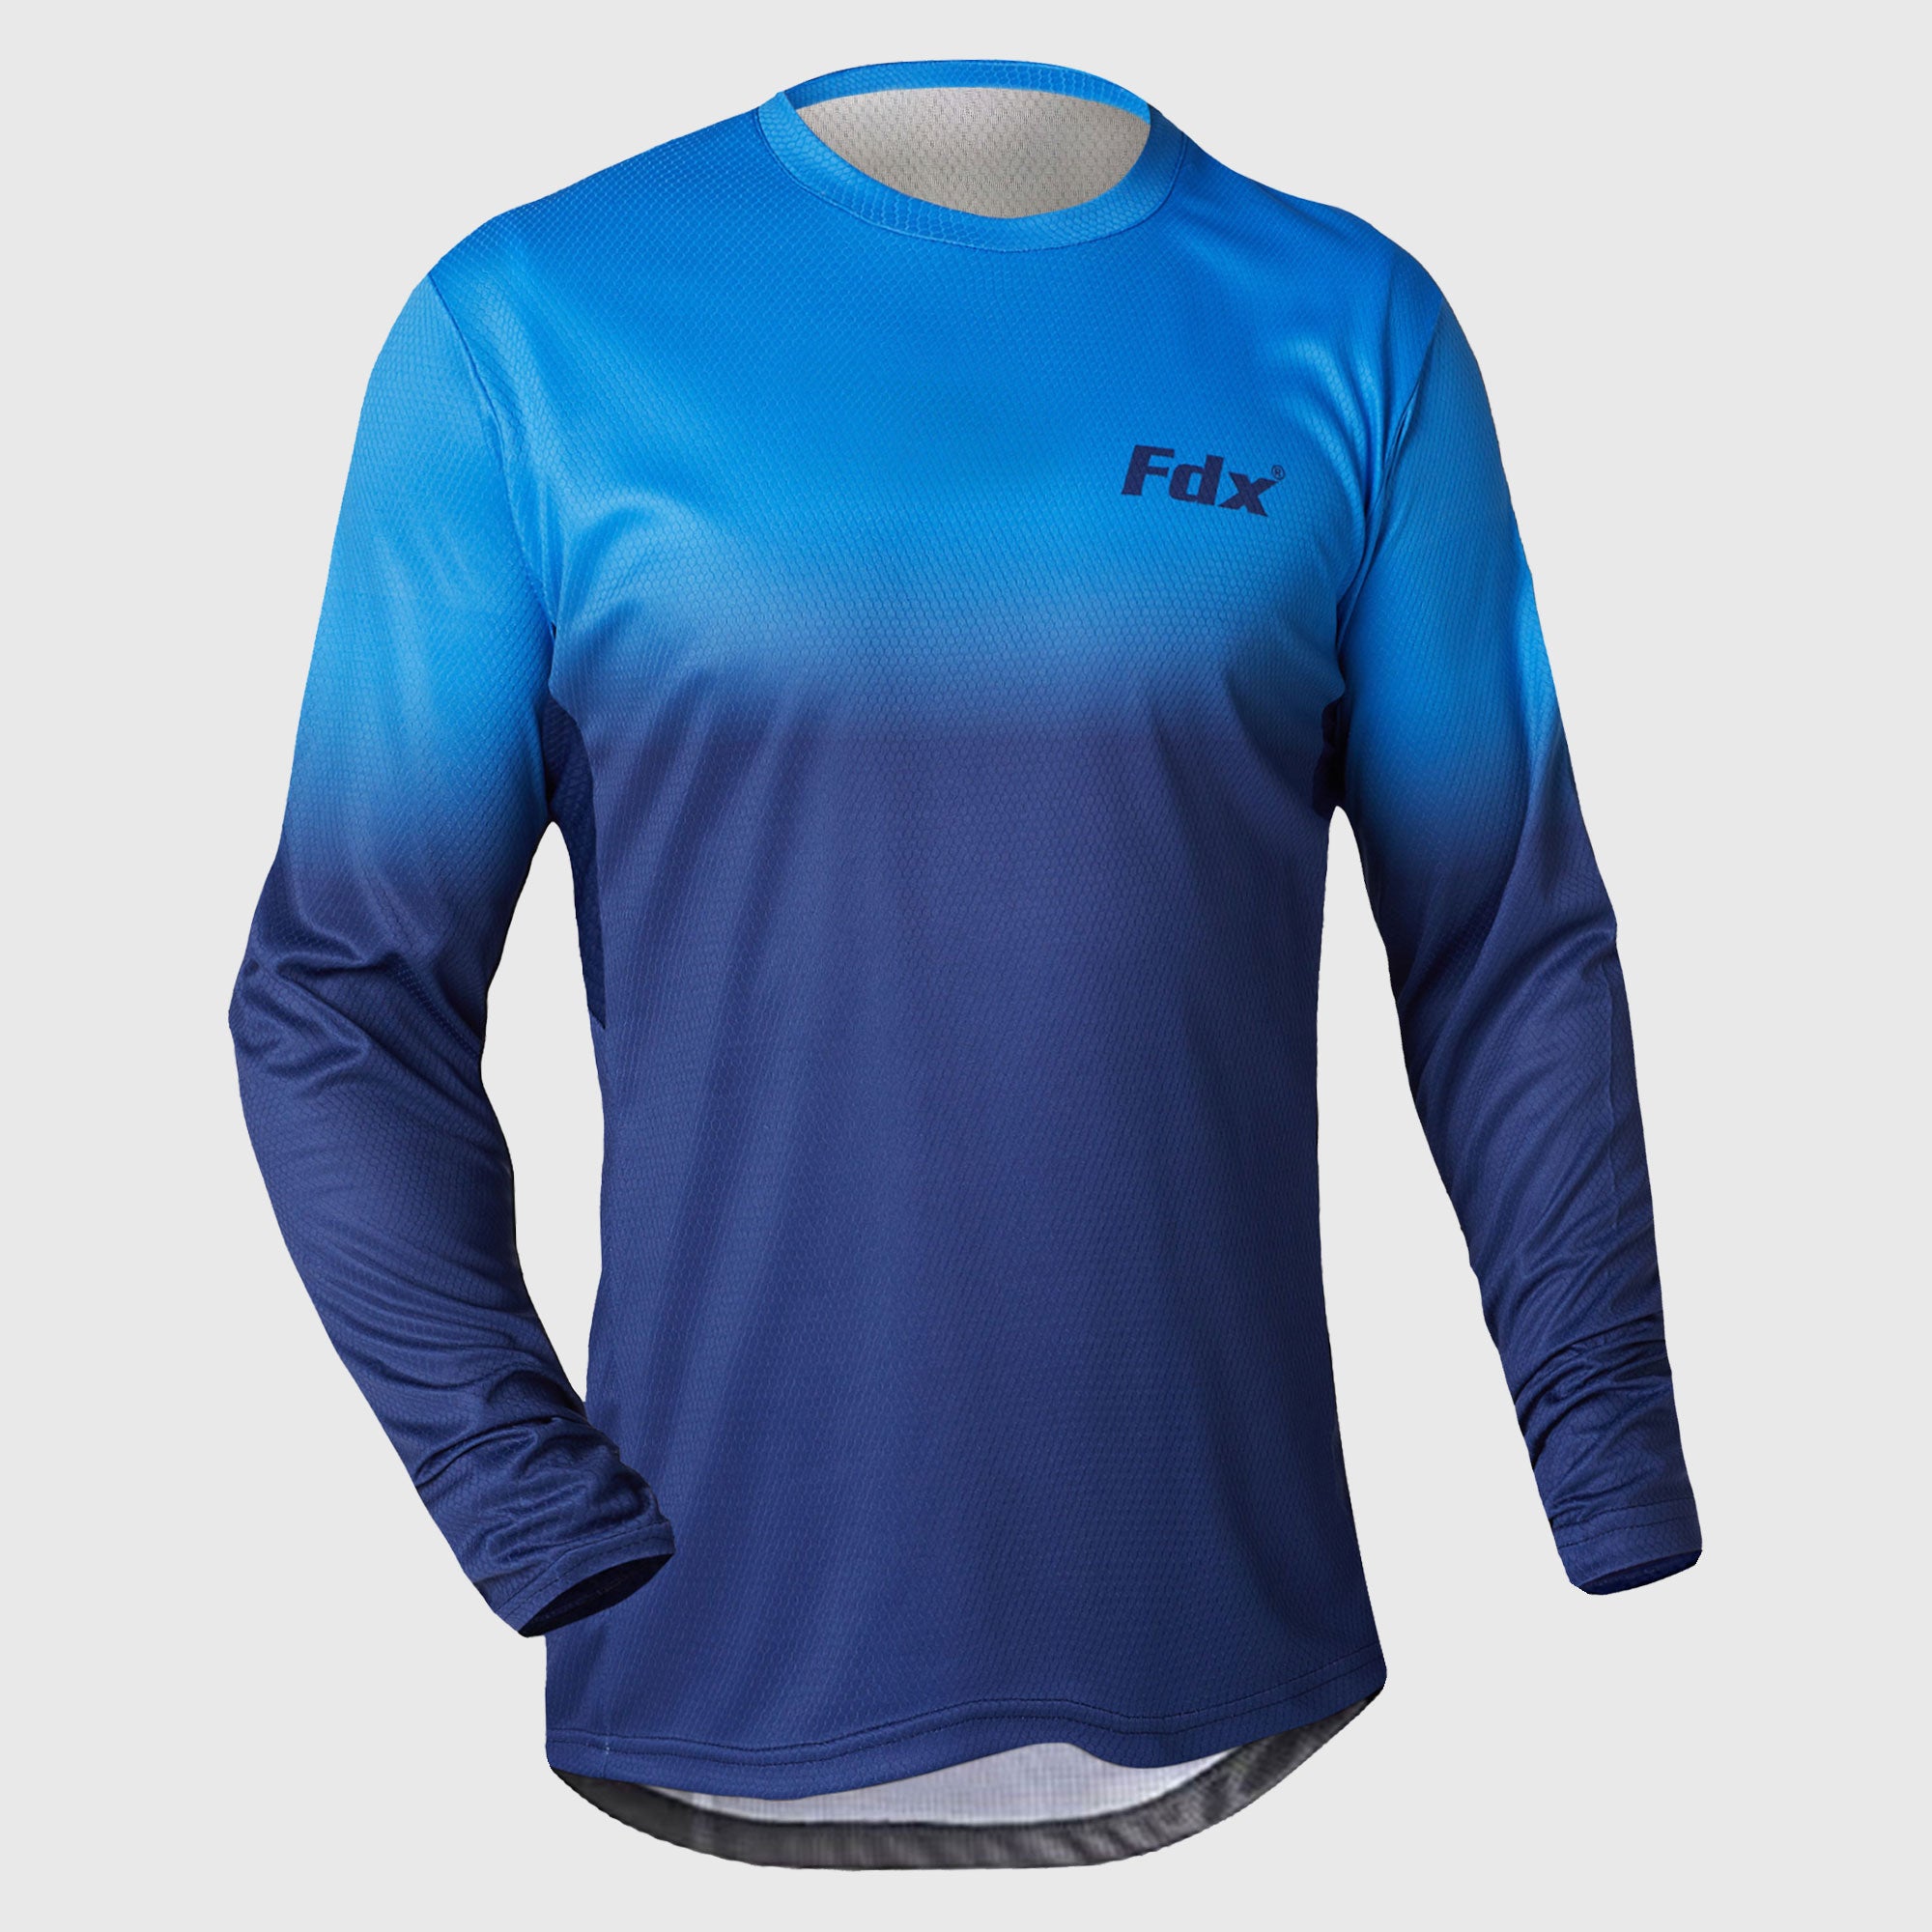 Fdx Men's Blue MTB Jersey Lightweight, Breathable Fabric Summer Mountain Bike Jersey Cycling Gear Uk